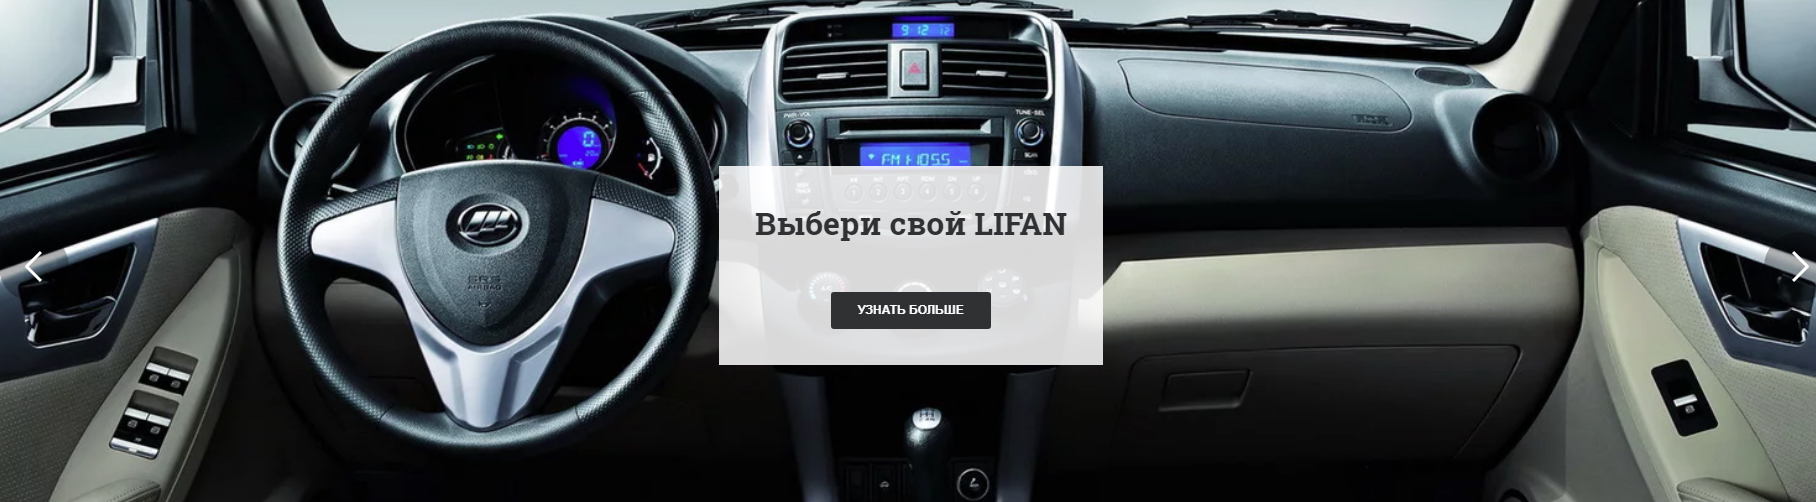 Автомобили Lifan во Владимире